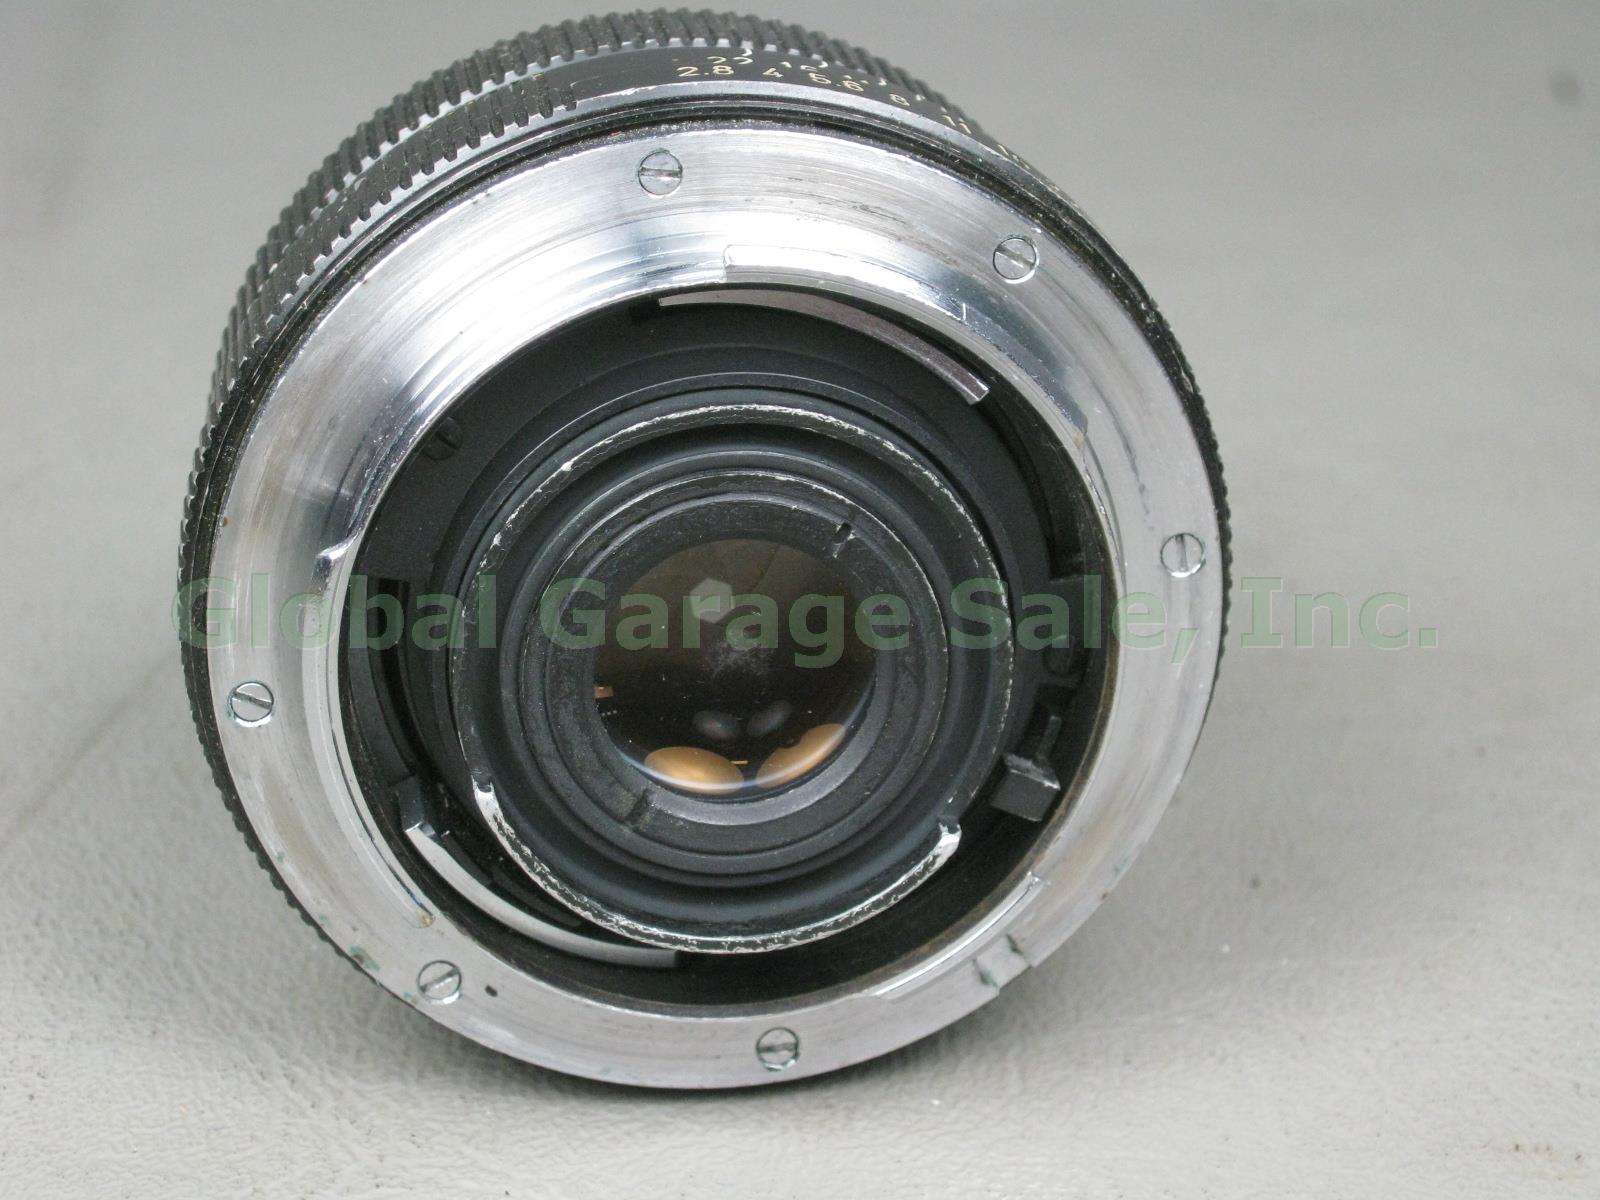 Vintage Leitz Leica R4s Camera Elmarit-R 1:2.8 f/2.8 35mm Lens Manuals Bundle NR 12